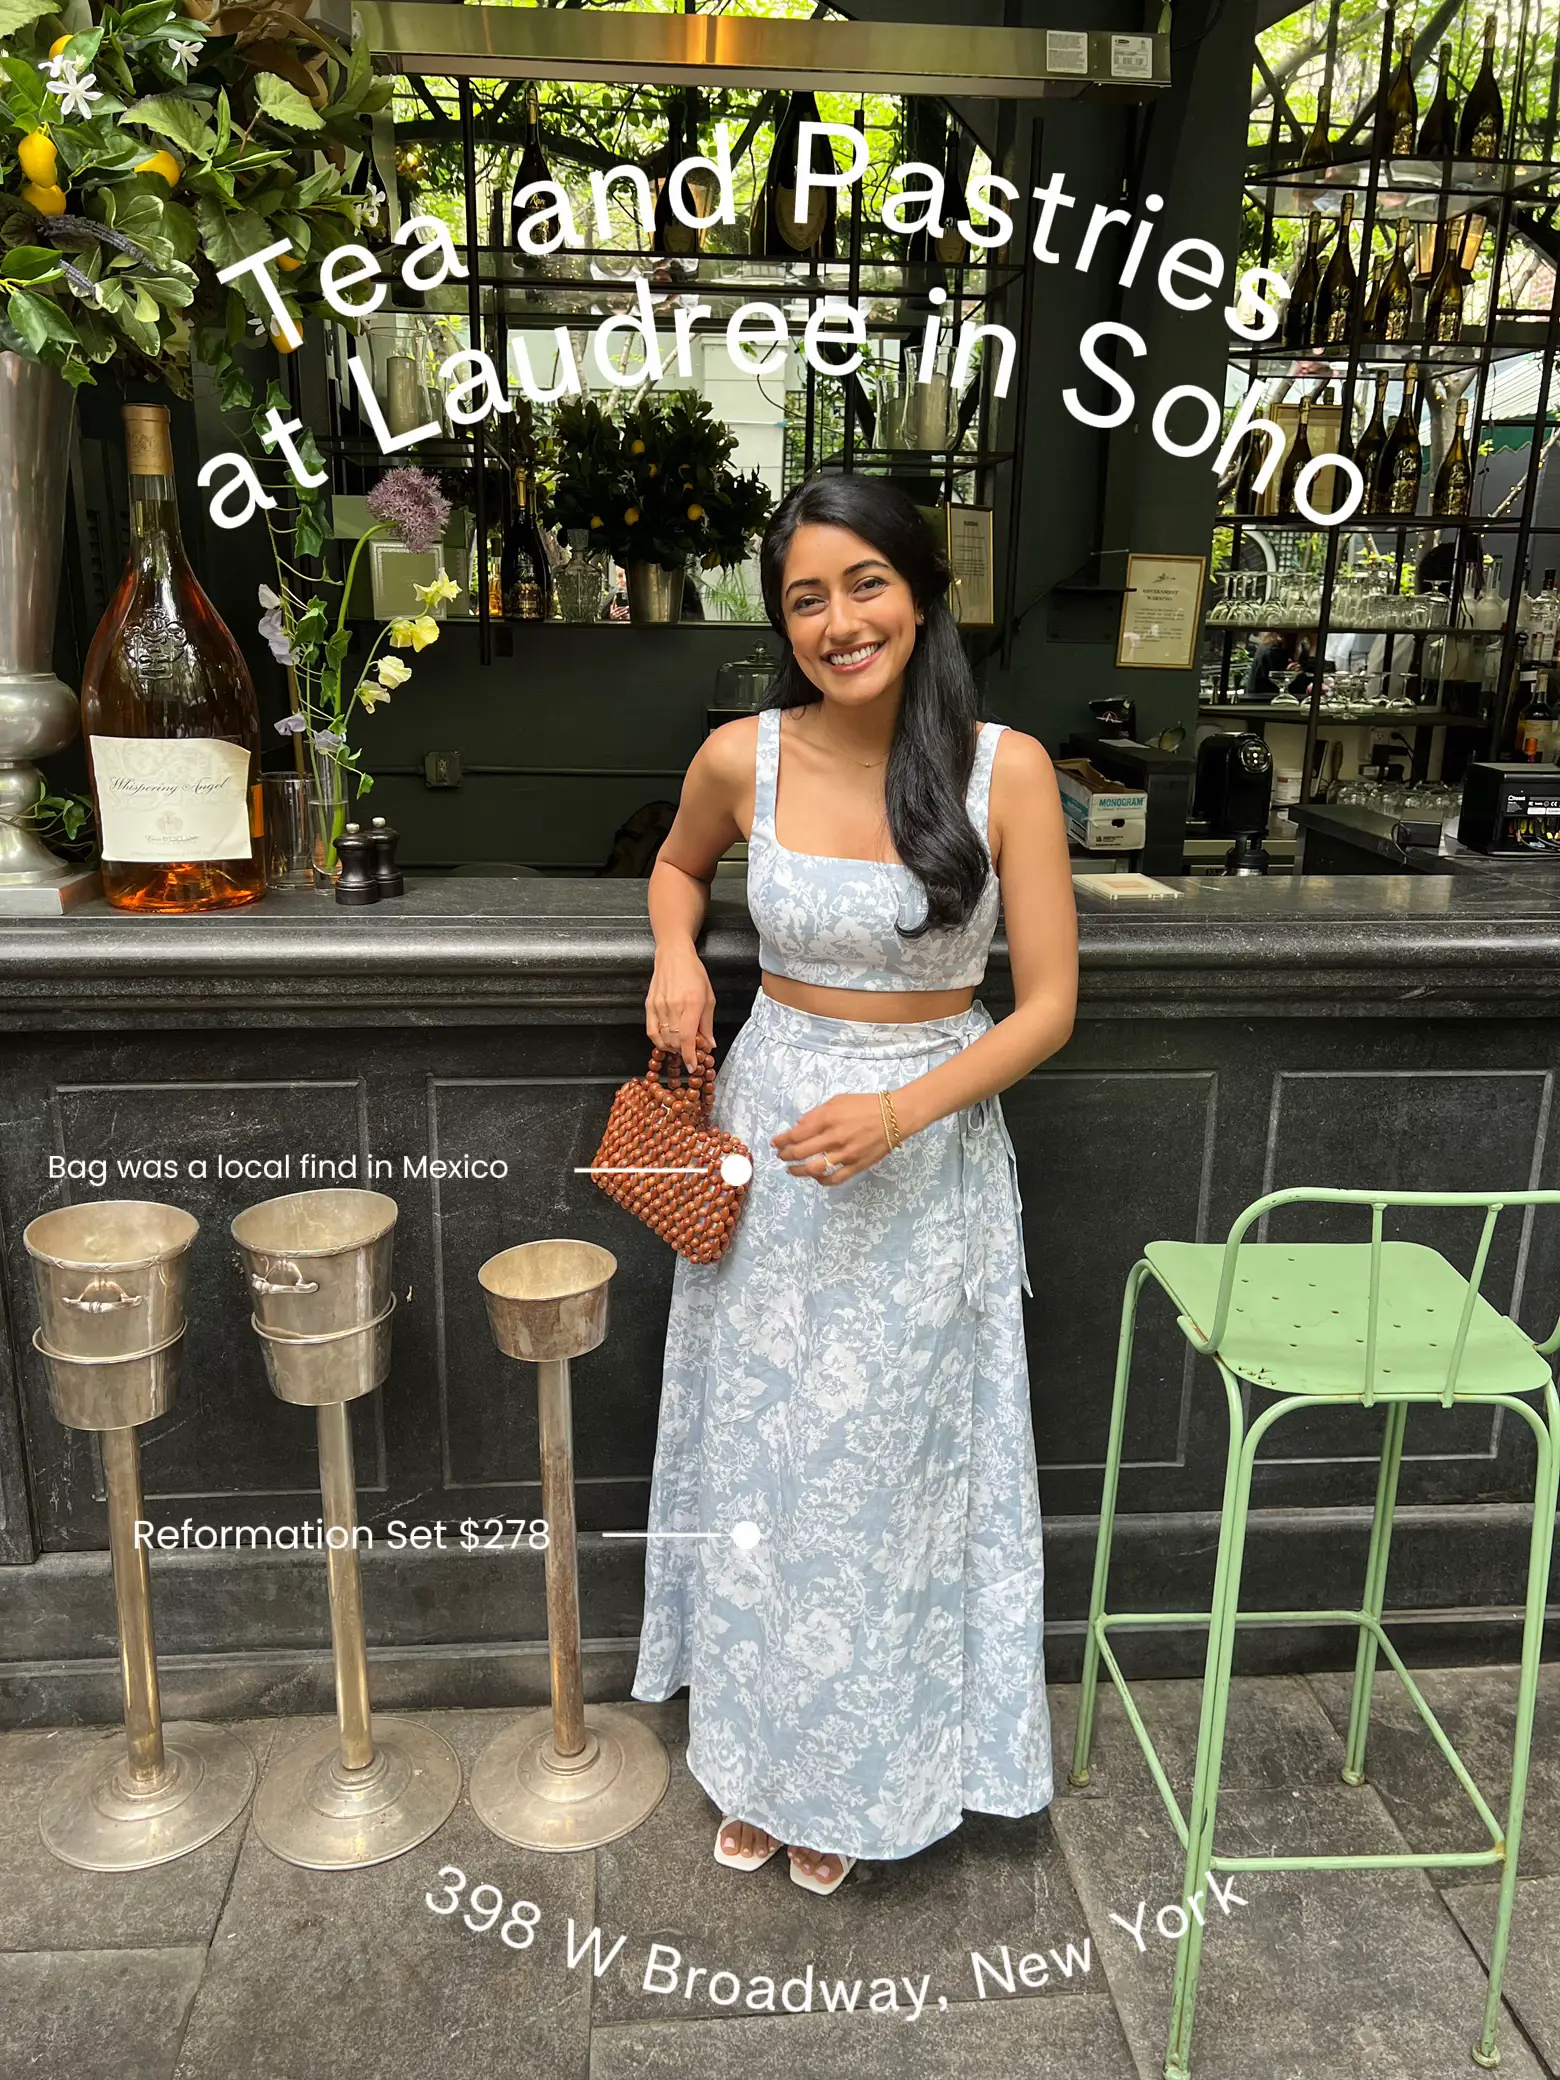 Tea and Pastries at Laudree | Suneet Maanが投稿したフォトブック